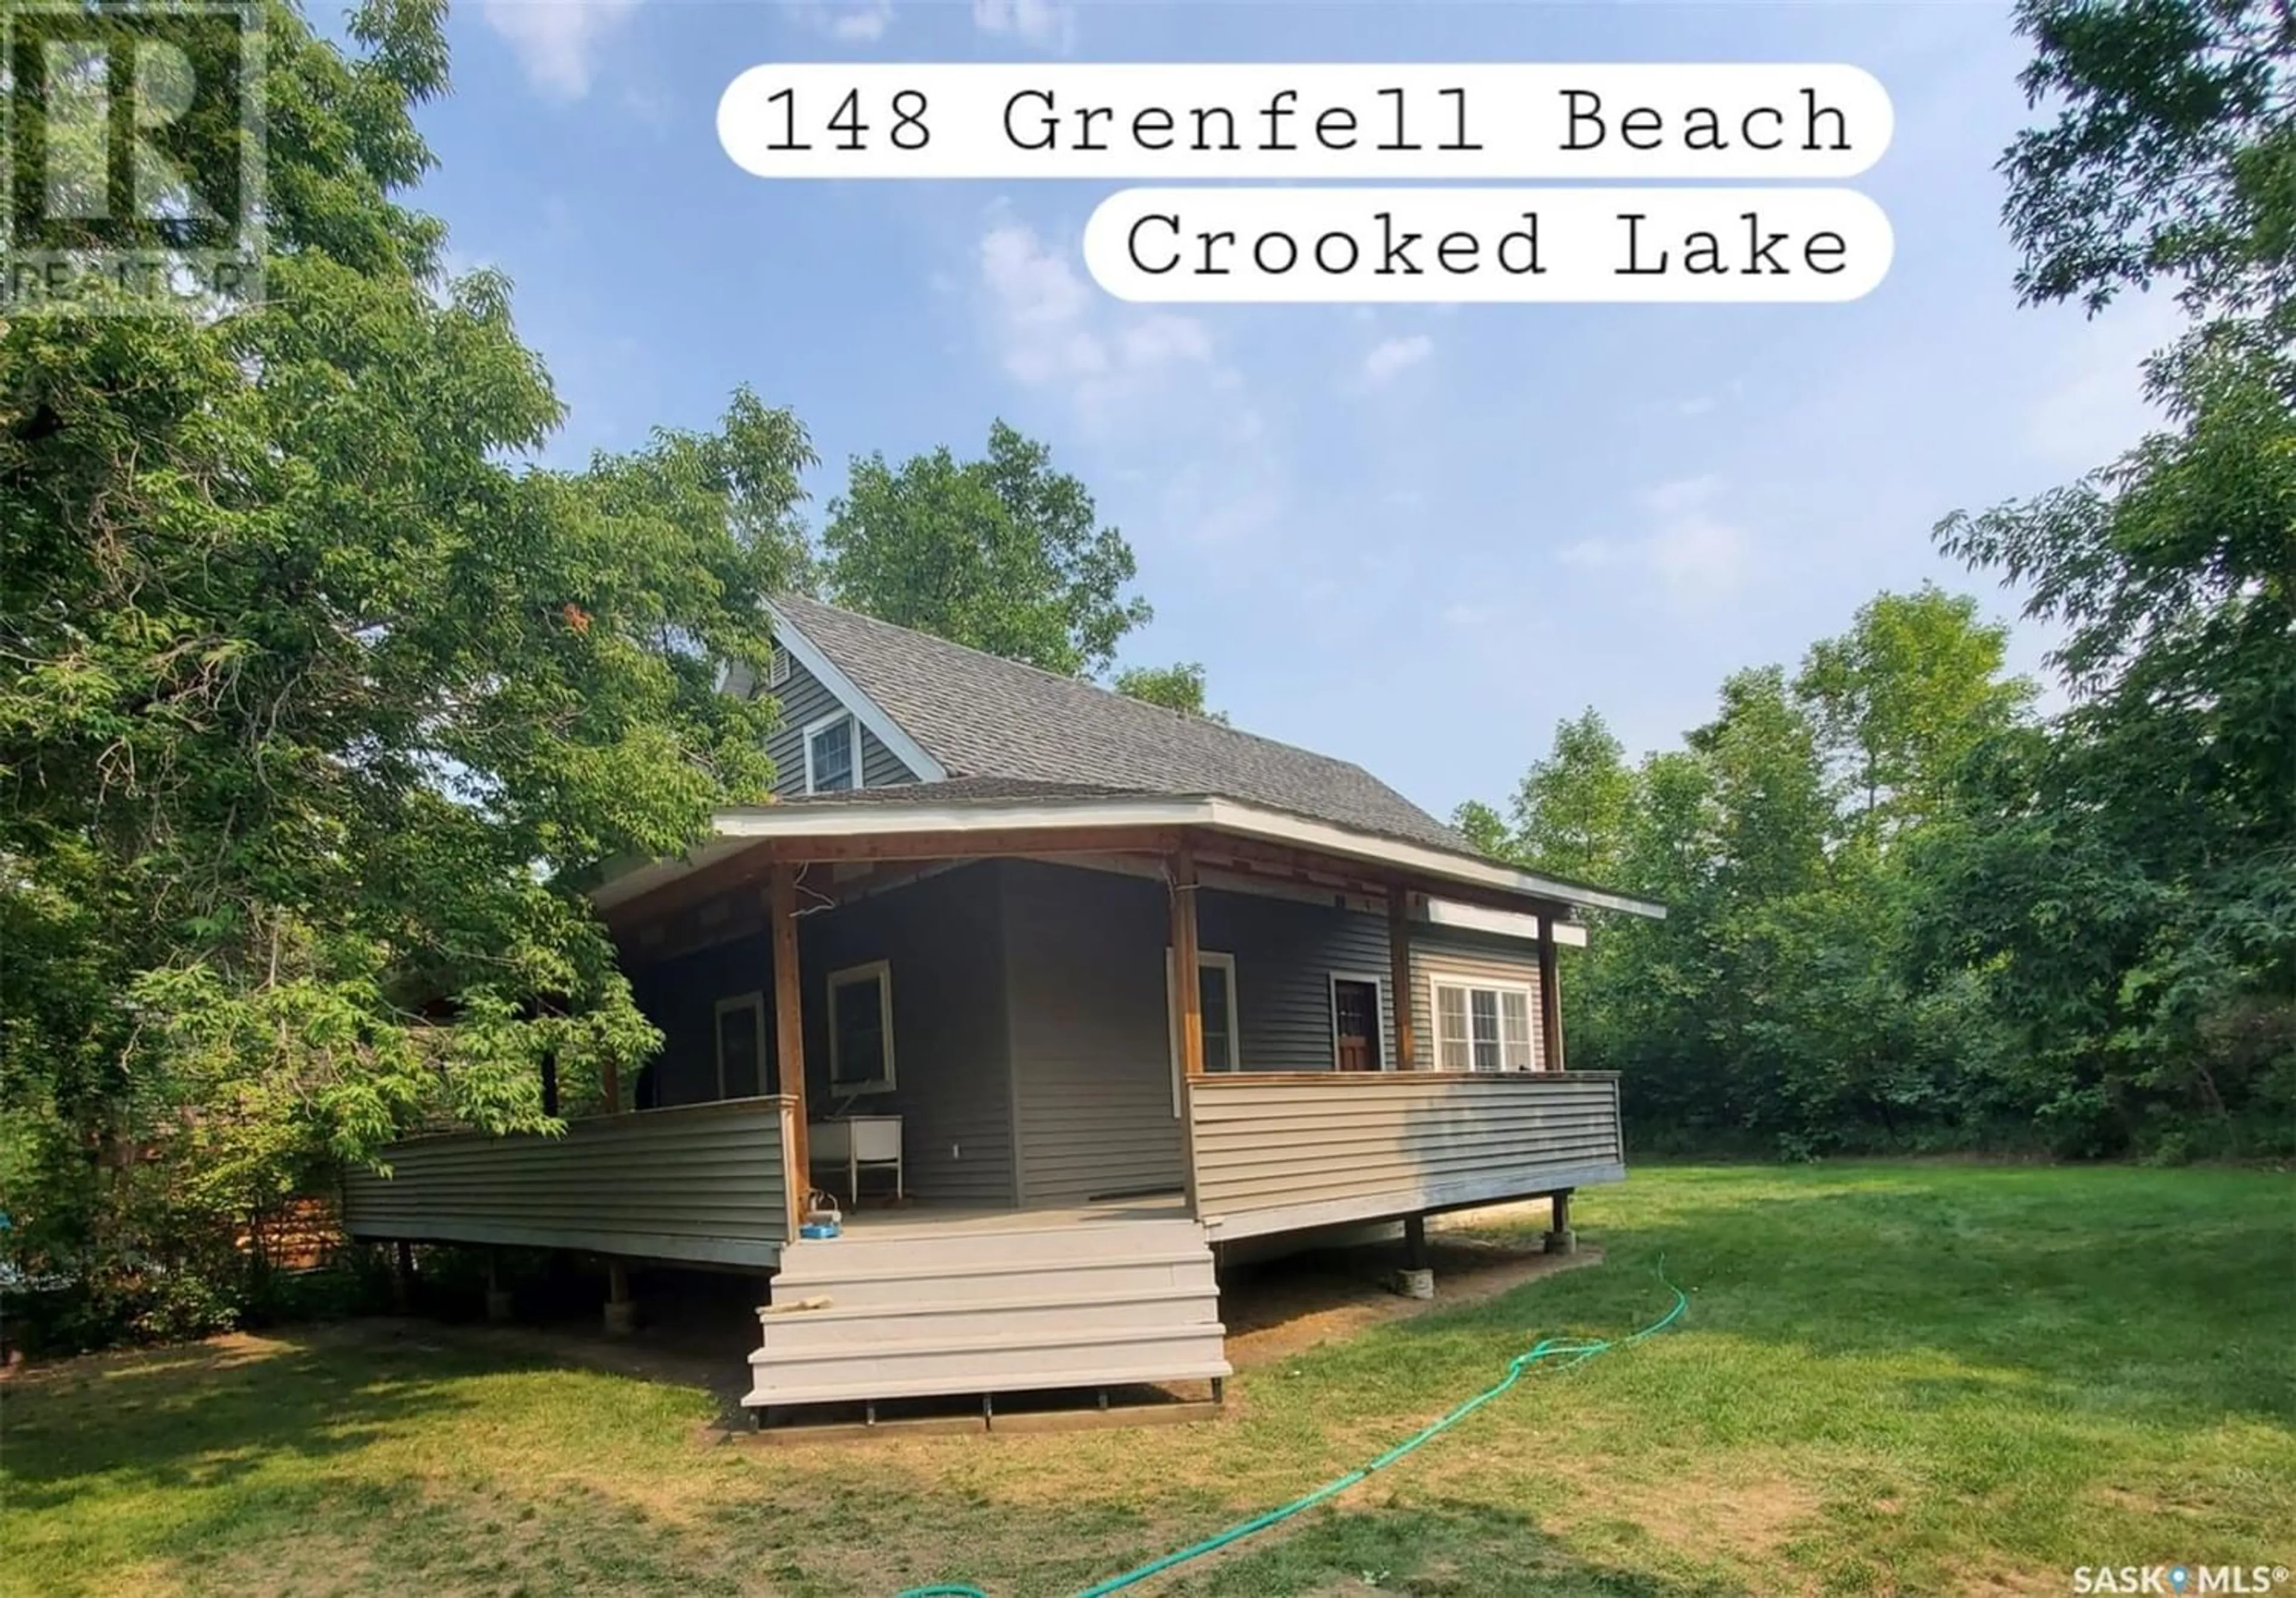 Cottage for 148 Grenfell BEACH, Crooked Lake Saskatchewan S0G2B0